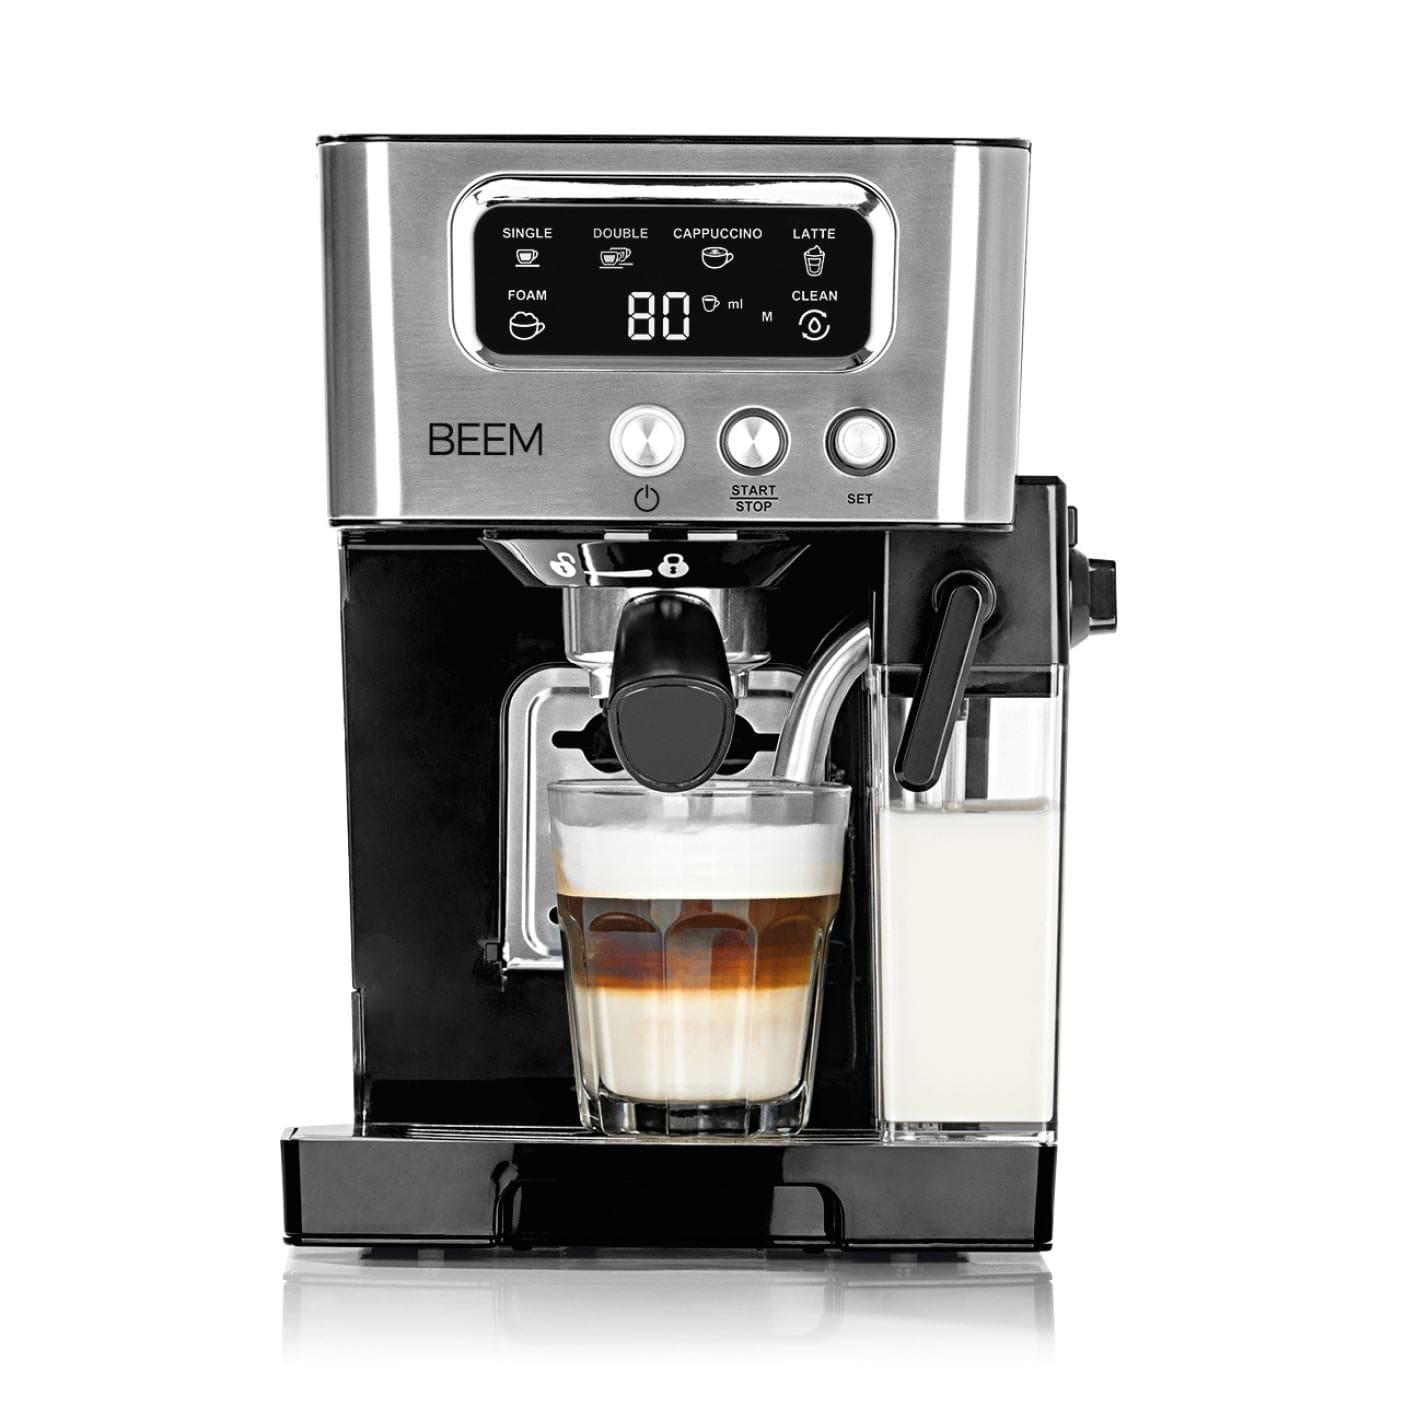 ESPRESSO-LATTE espresso portafilter machine - 15 bar